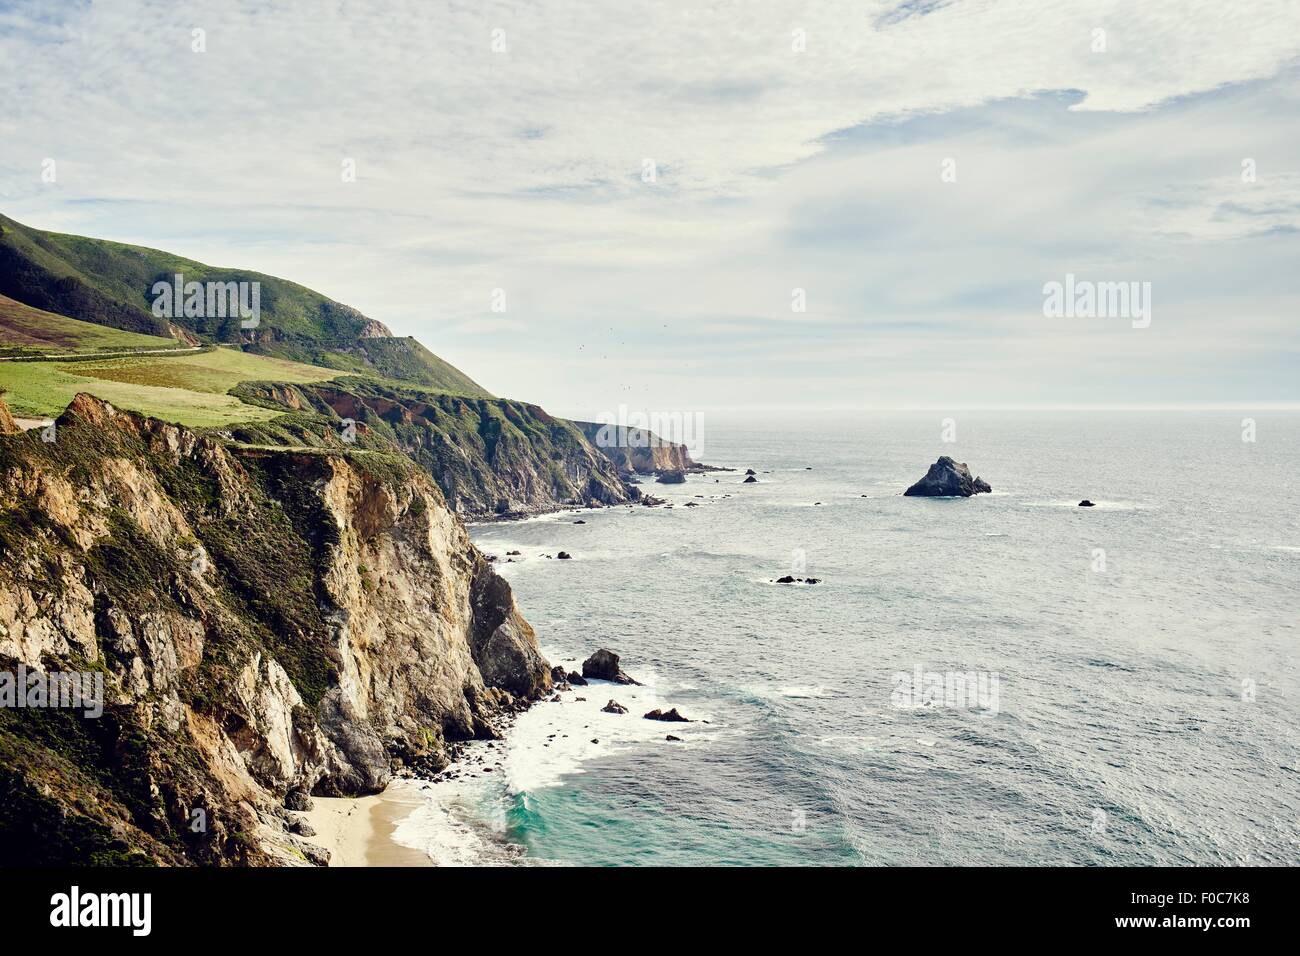 View of coastline cliffs and sea, Big Sur, California, USA Stock Photo